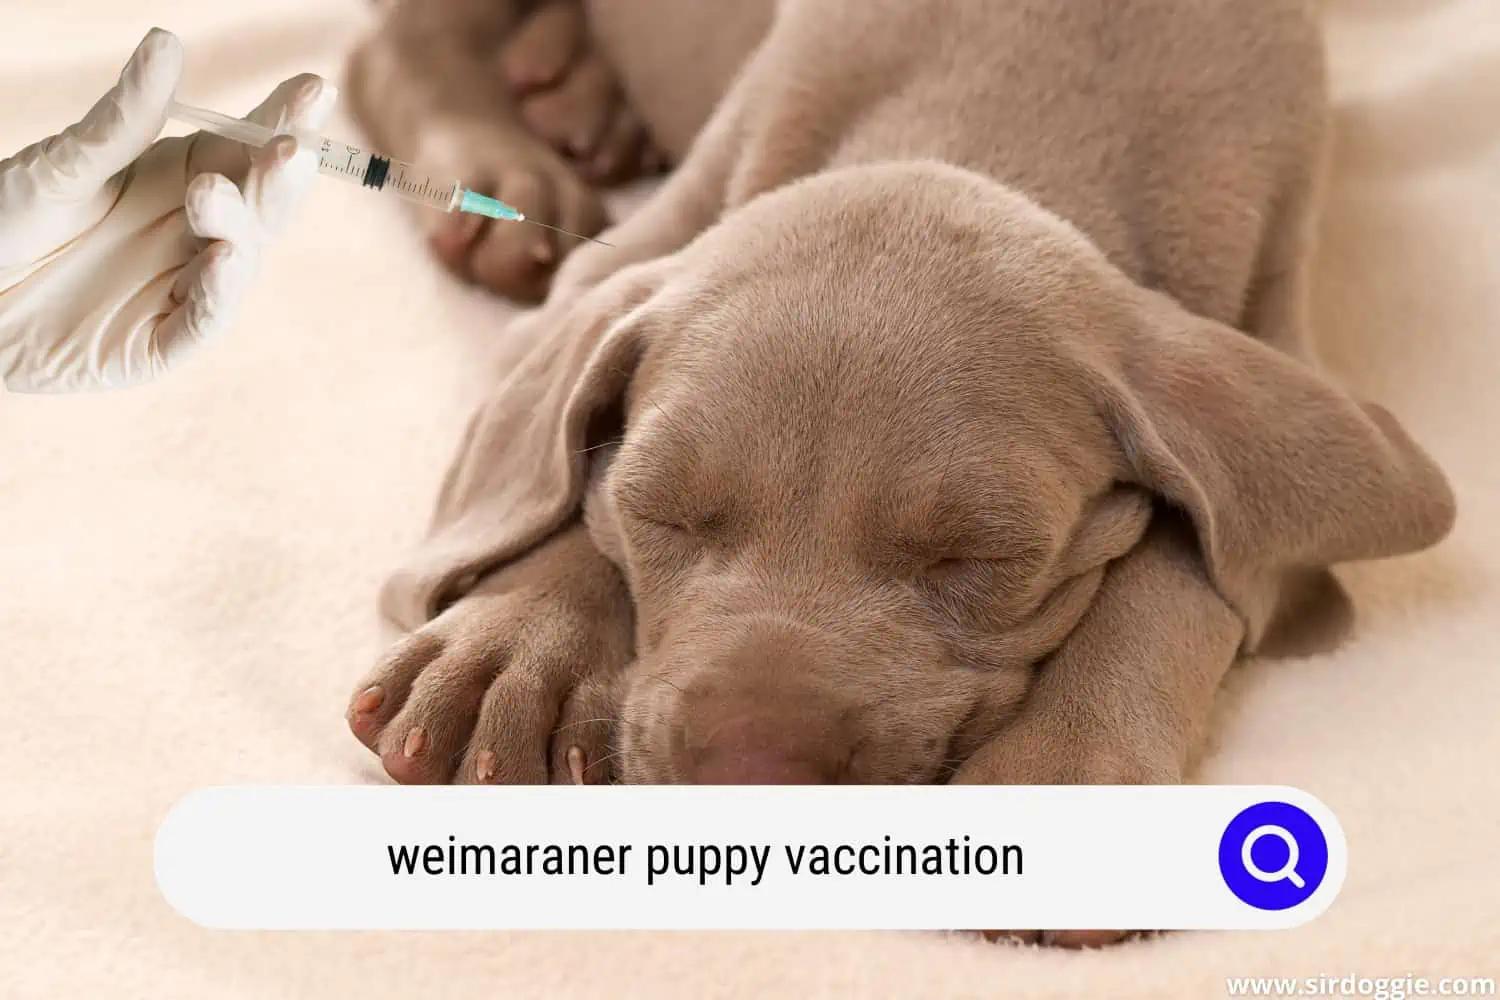 Weimaraner puppy sleeping while getting a vaccine